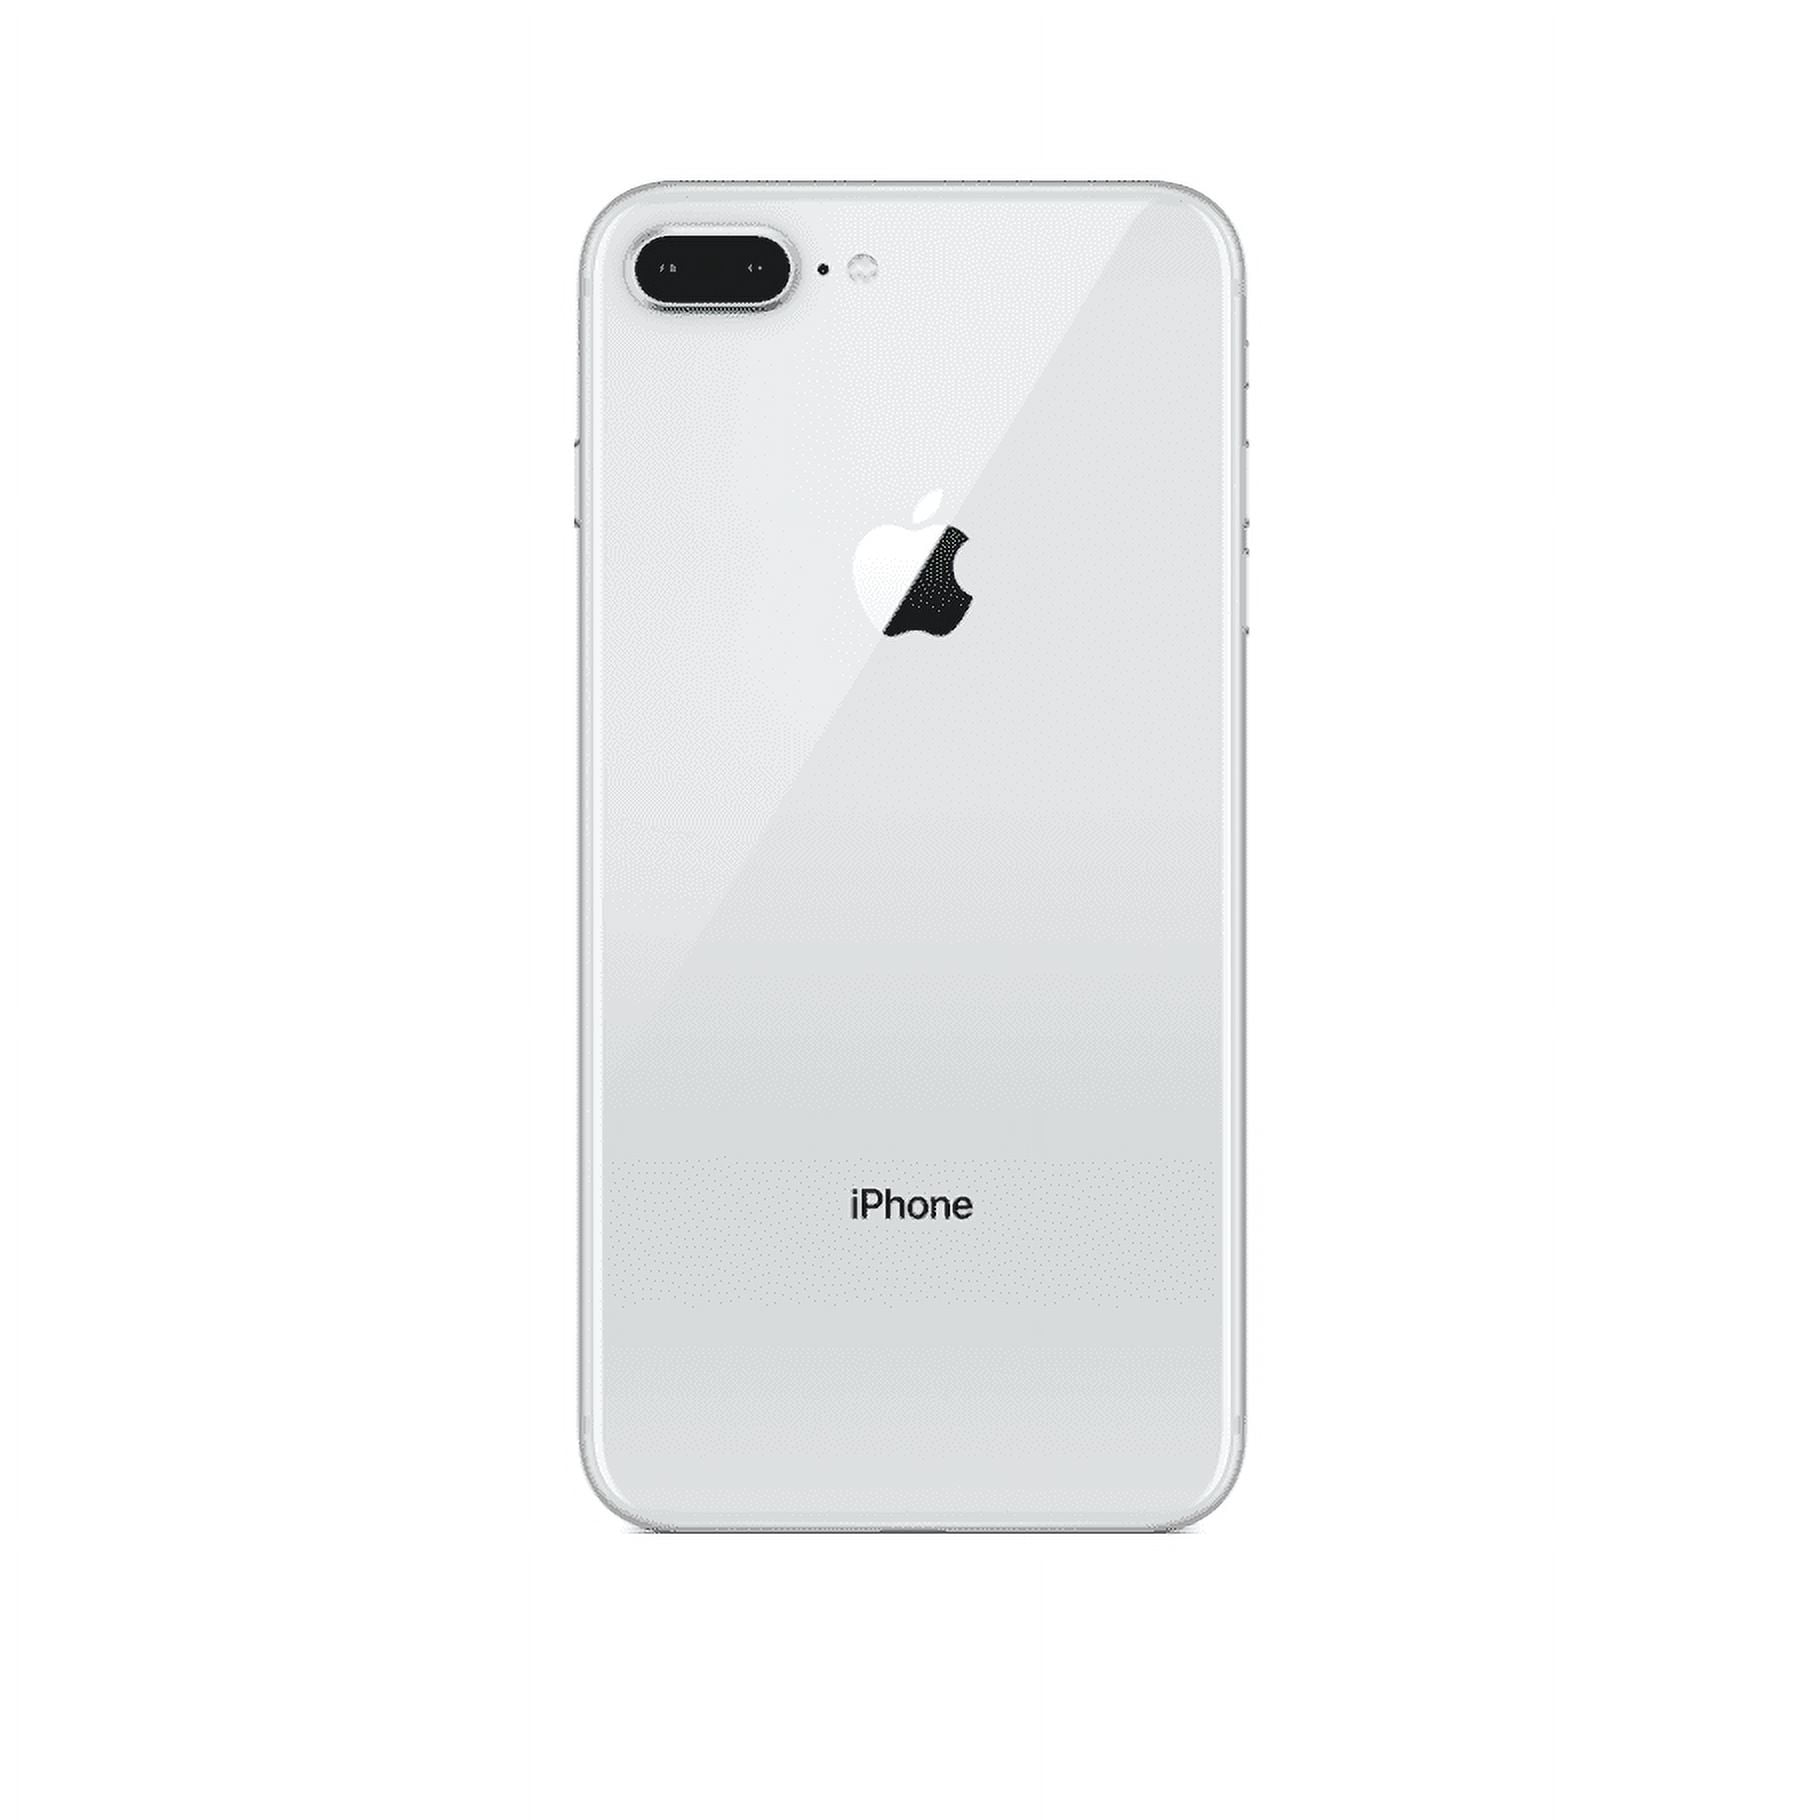 Apple iPhone 8 Plus Factory Unlocked SmartPhone 64GB 128GB 256GB